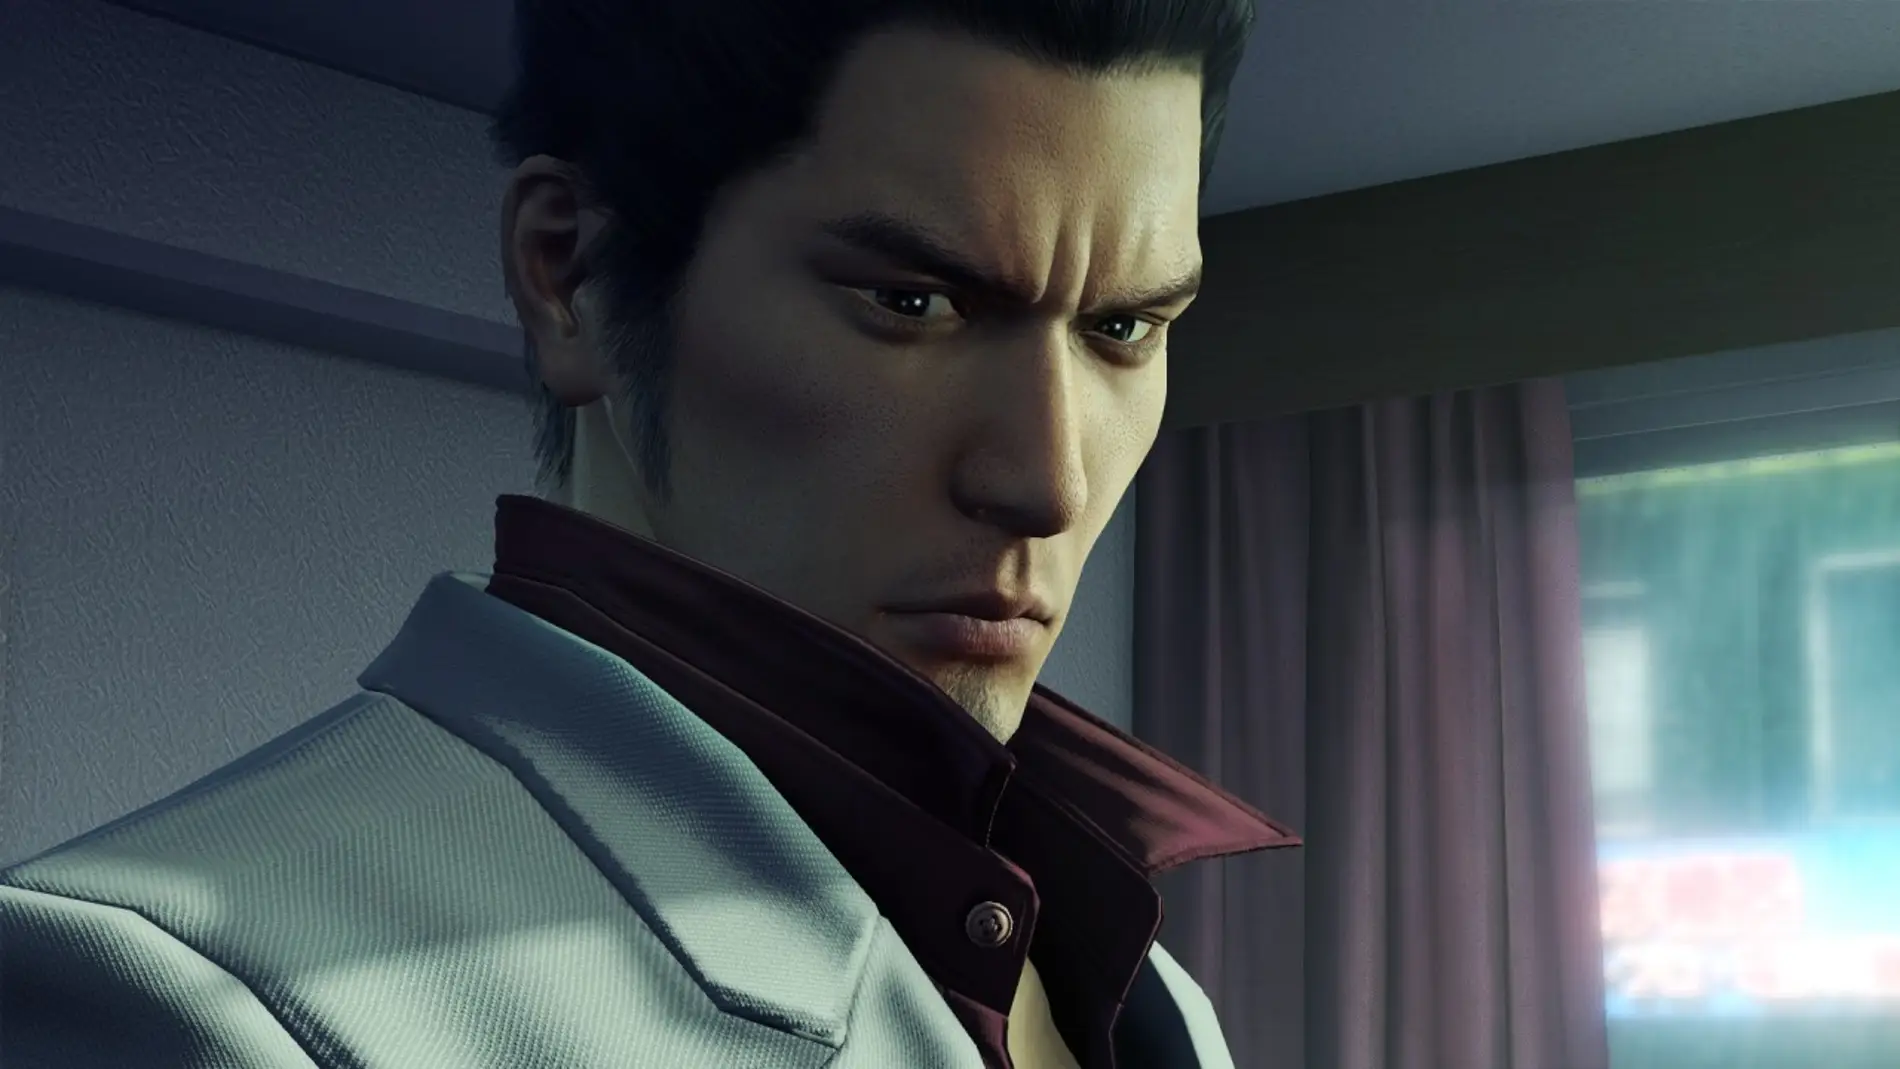 PS Plus de novembro terá Bulletstorm e Yakuza de graça no PS4